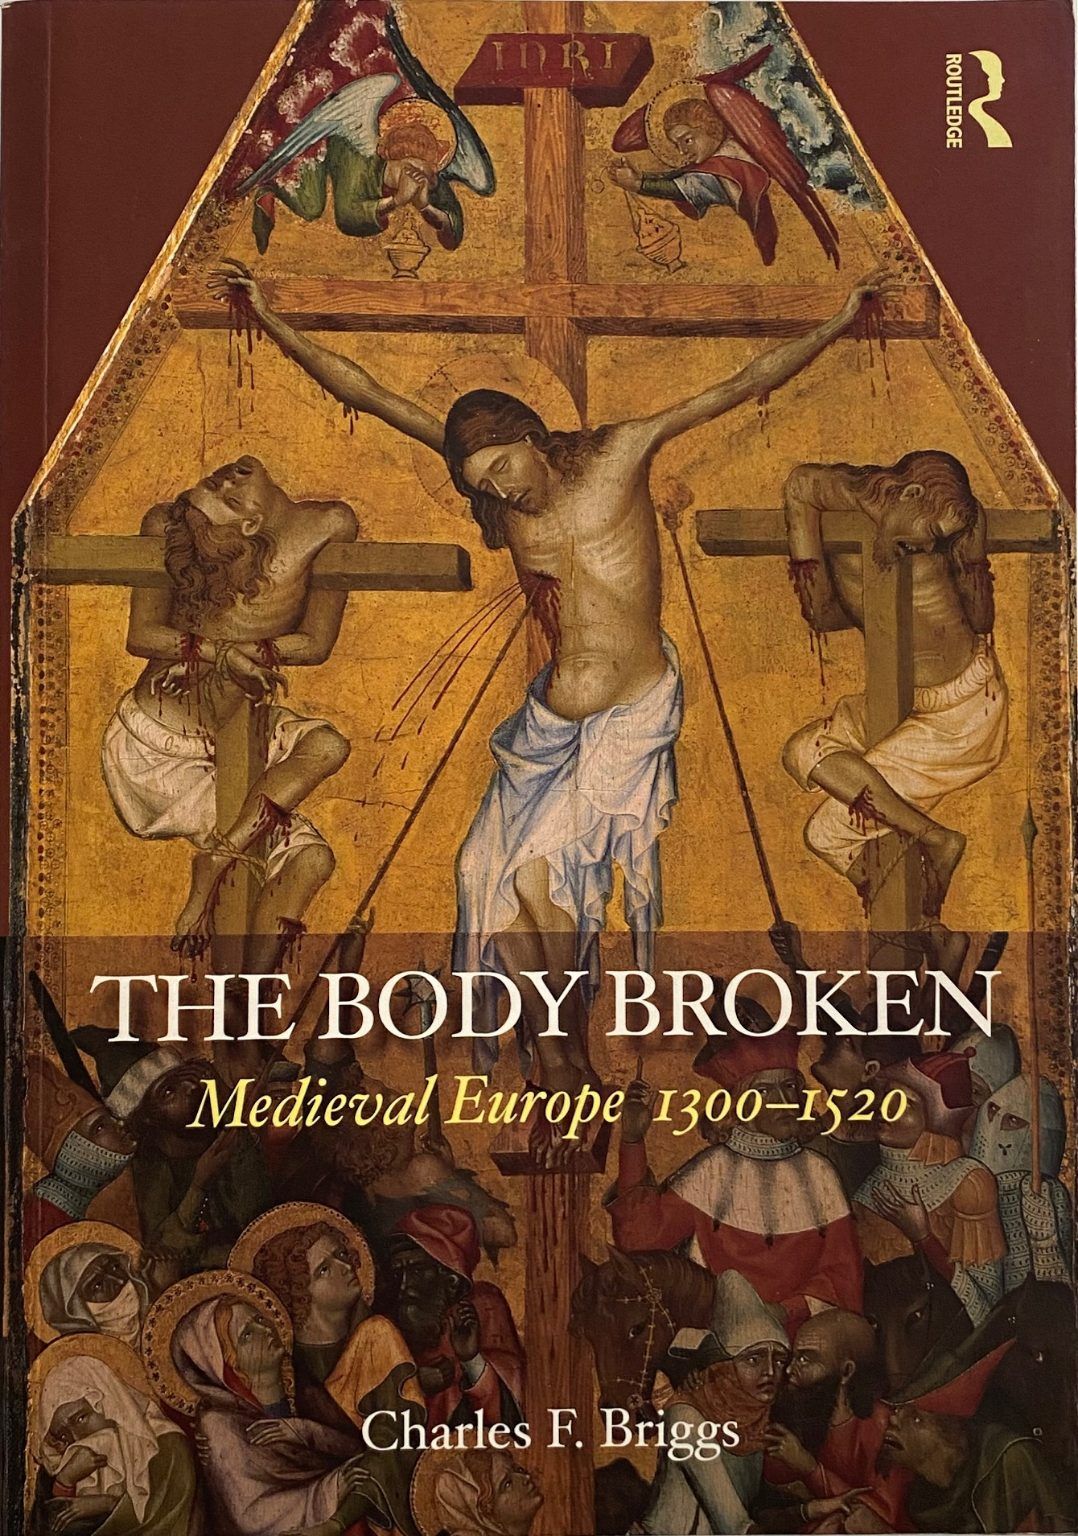 THE BODY BROKEN: Medieval Europe 1300-1520